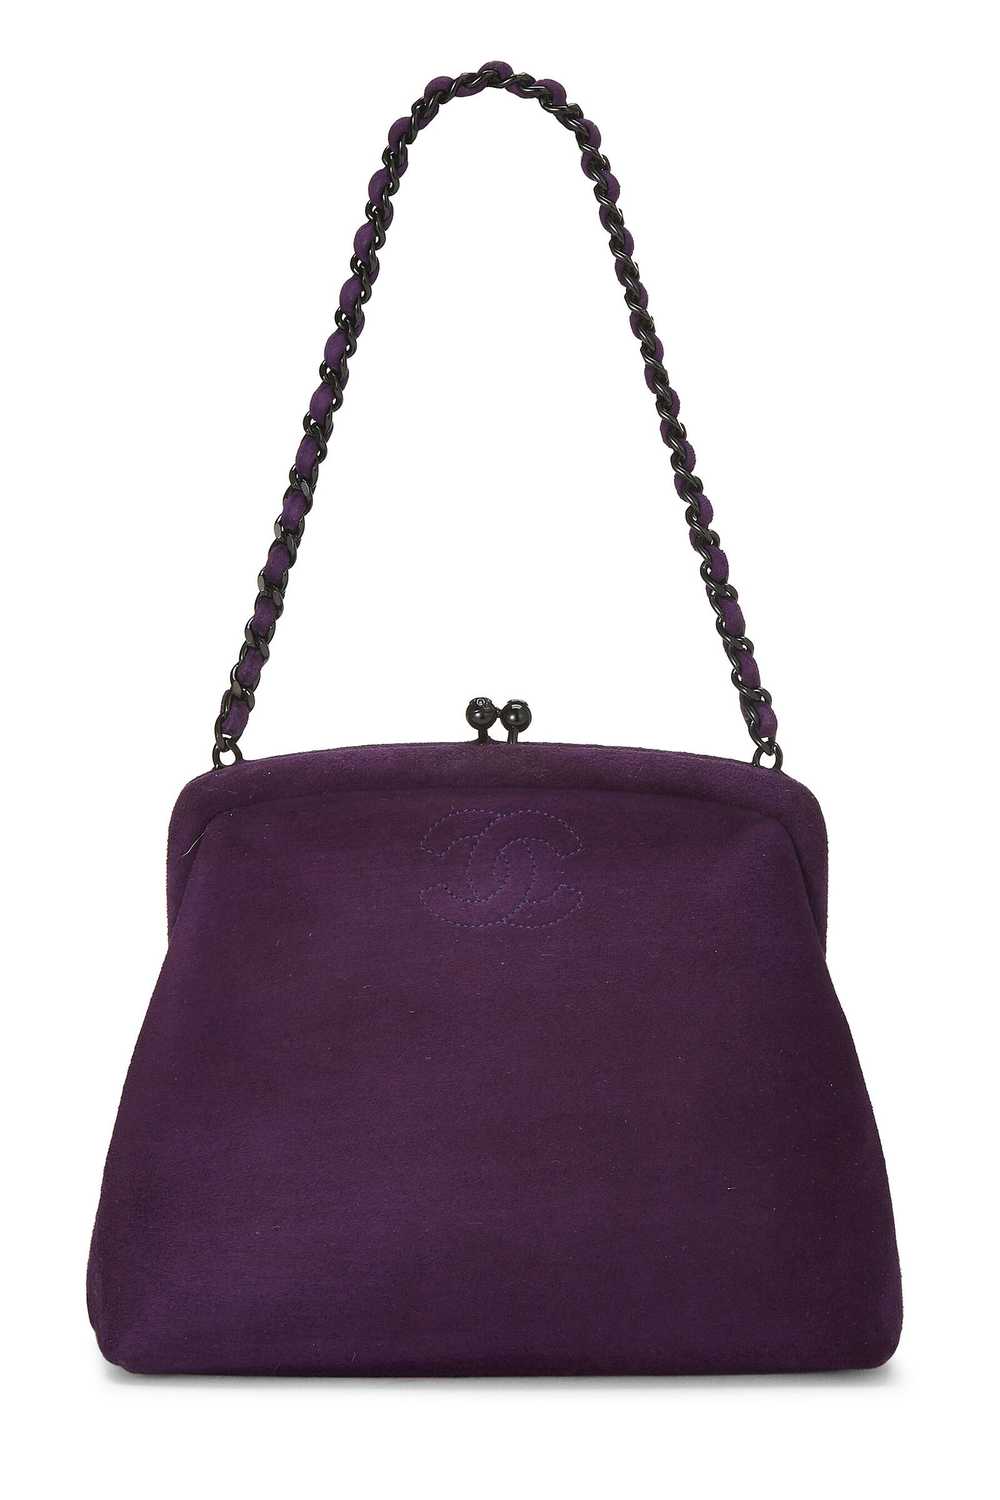 Purple Suede Kiss Lock Mini Bag - image 1